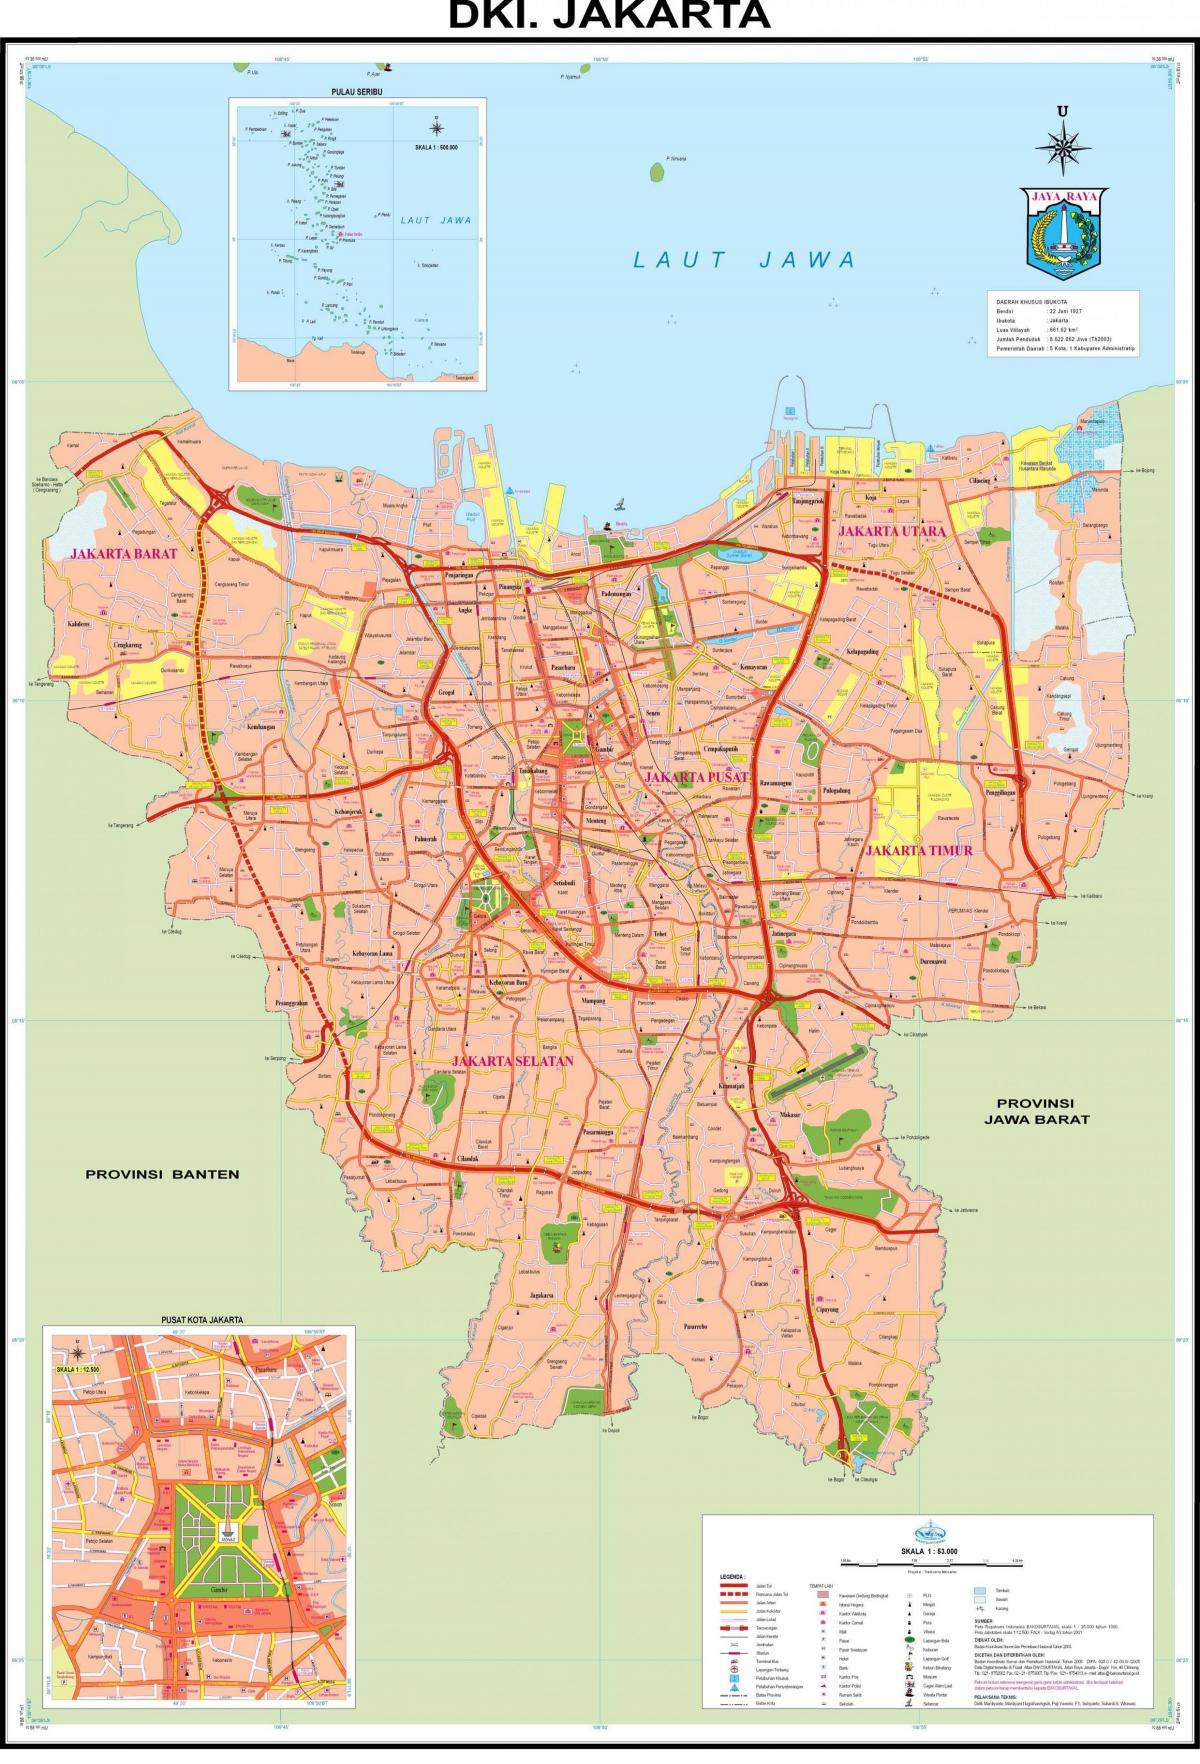 Jakarta city-map